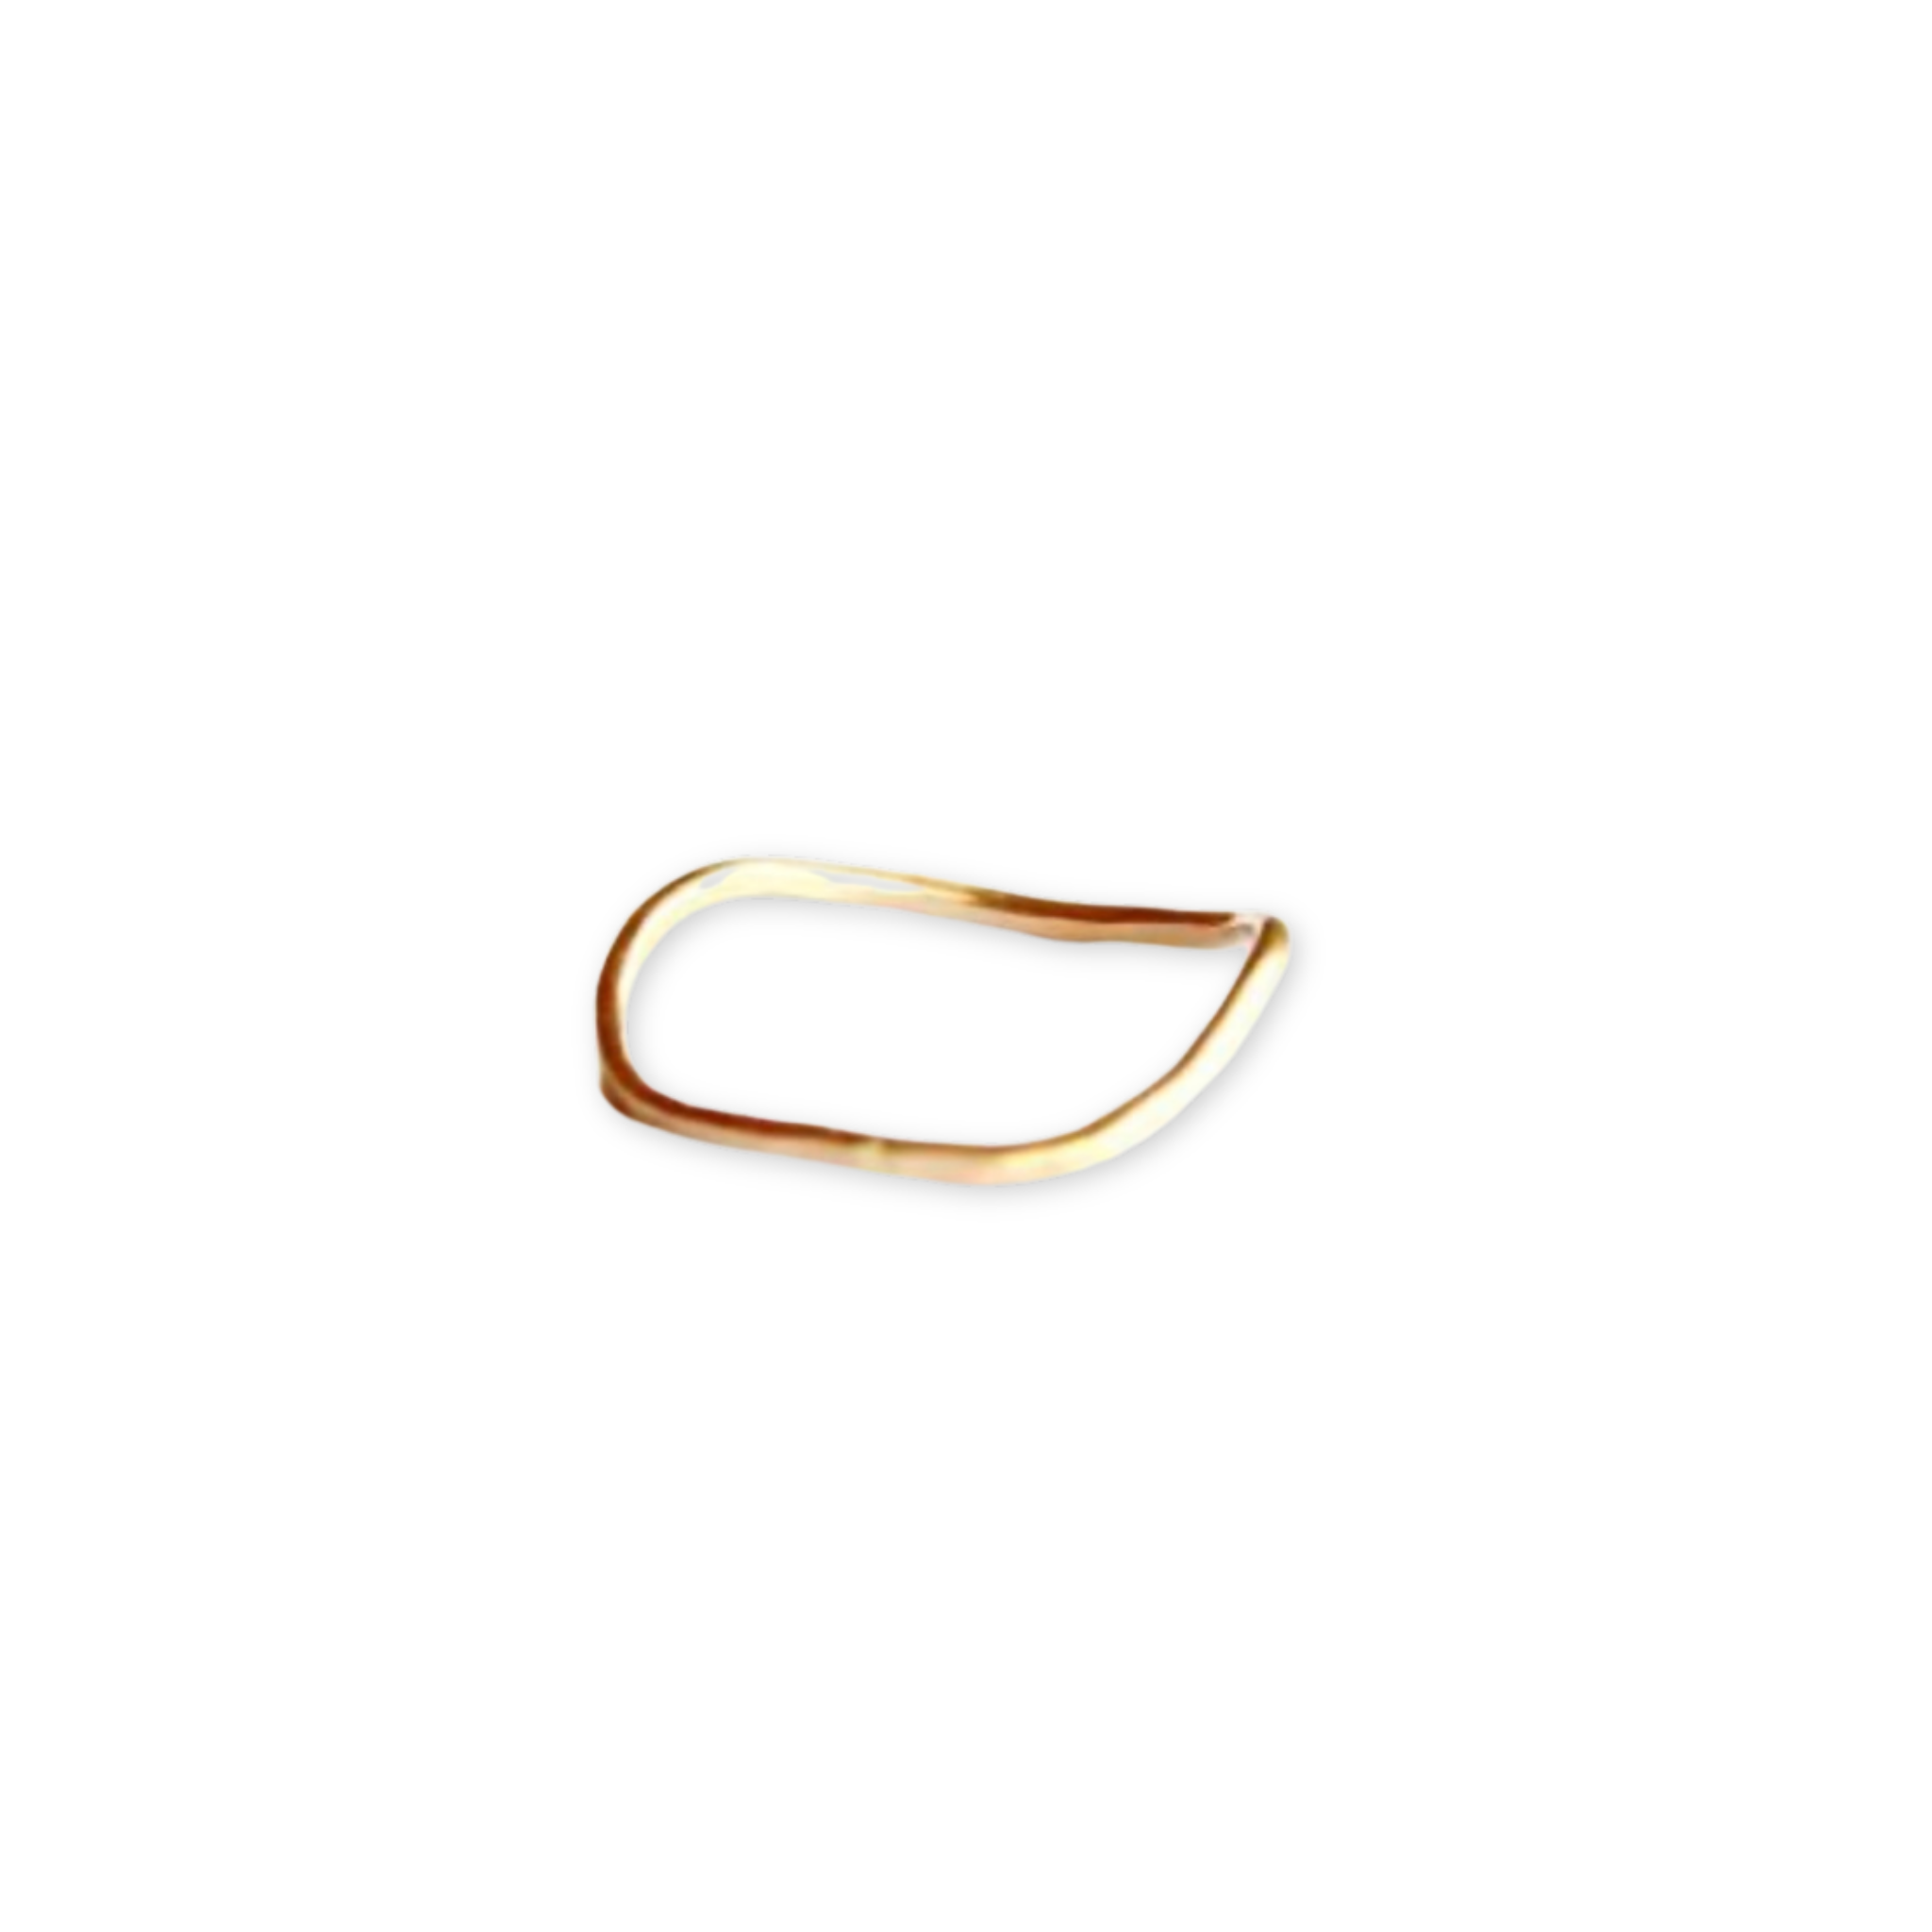 organic wave shaped gold ring